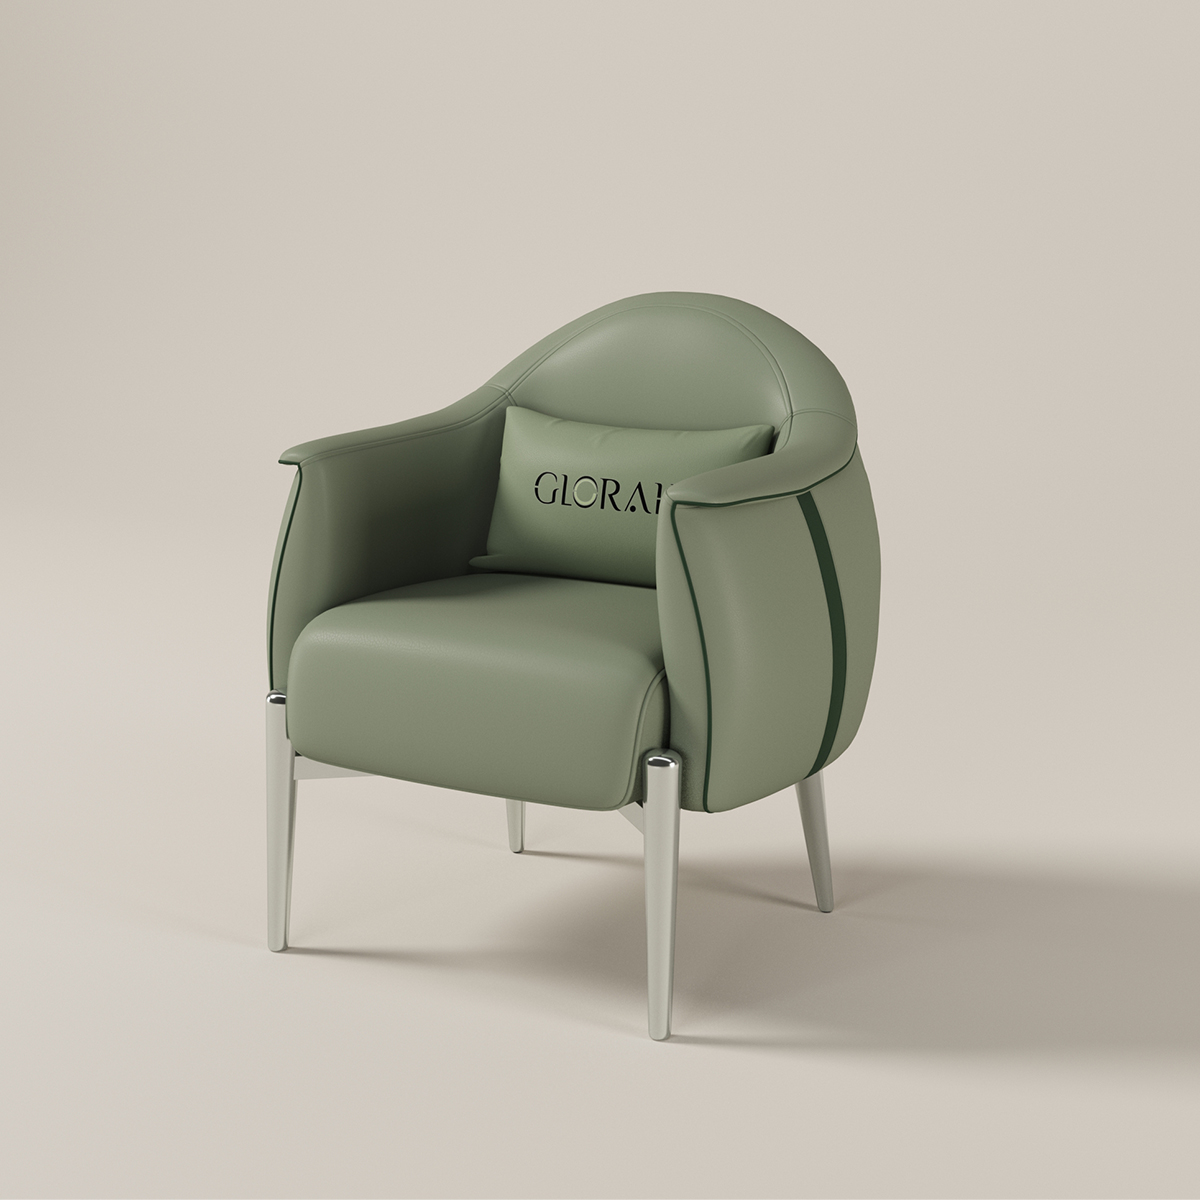 Glorall green nail chair (2)